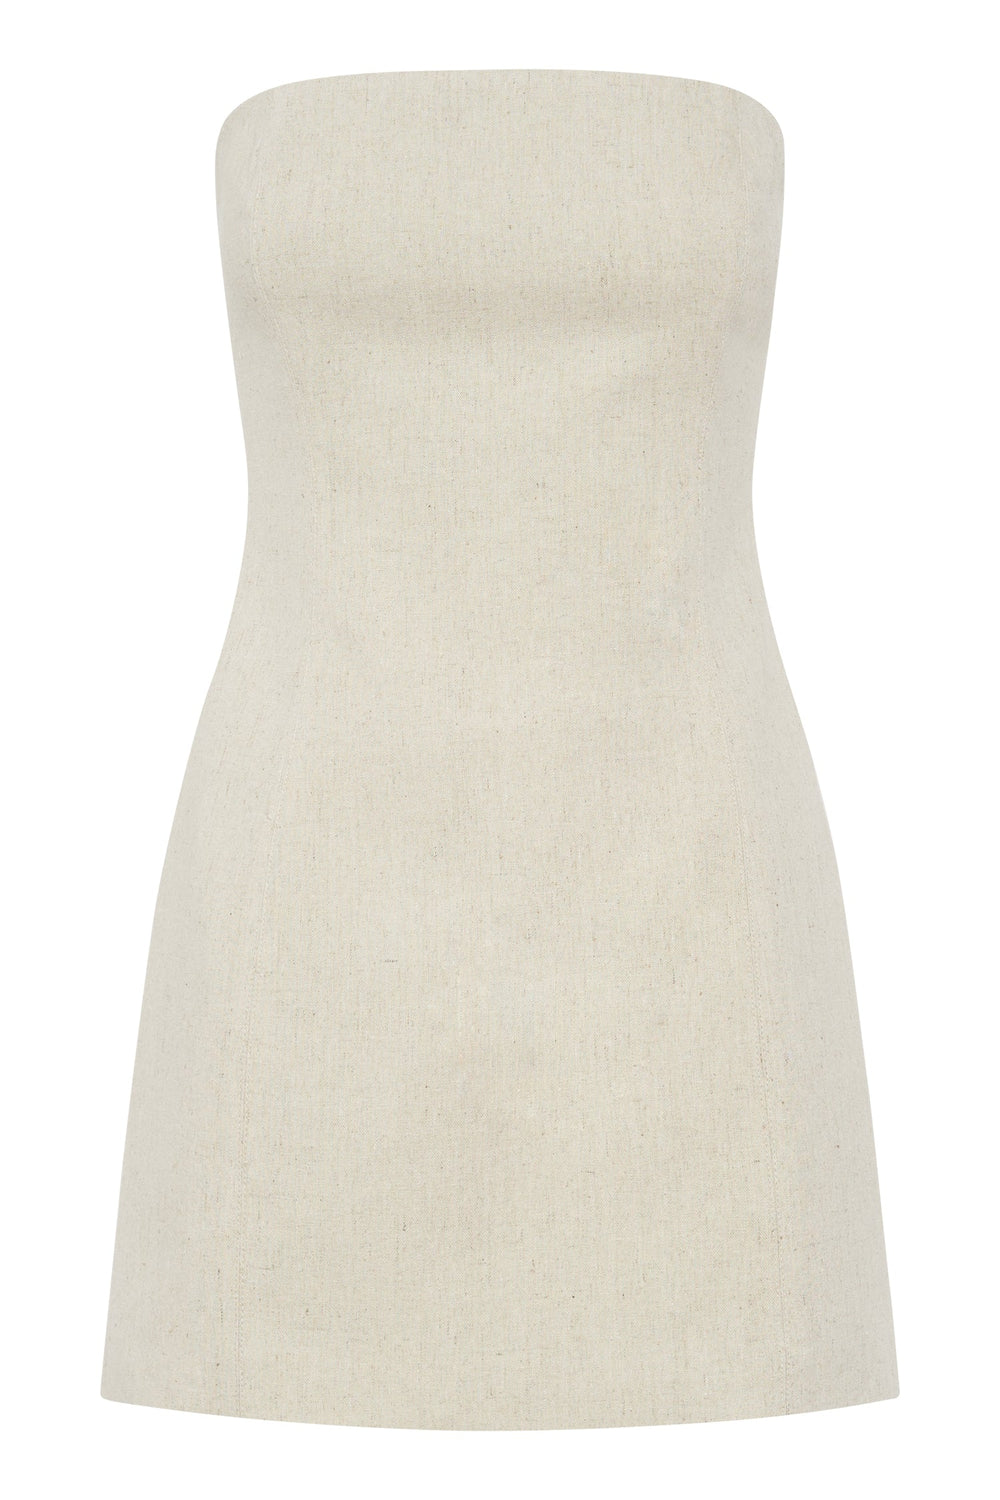 Maci Linen Mini Dress - Natural